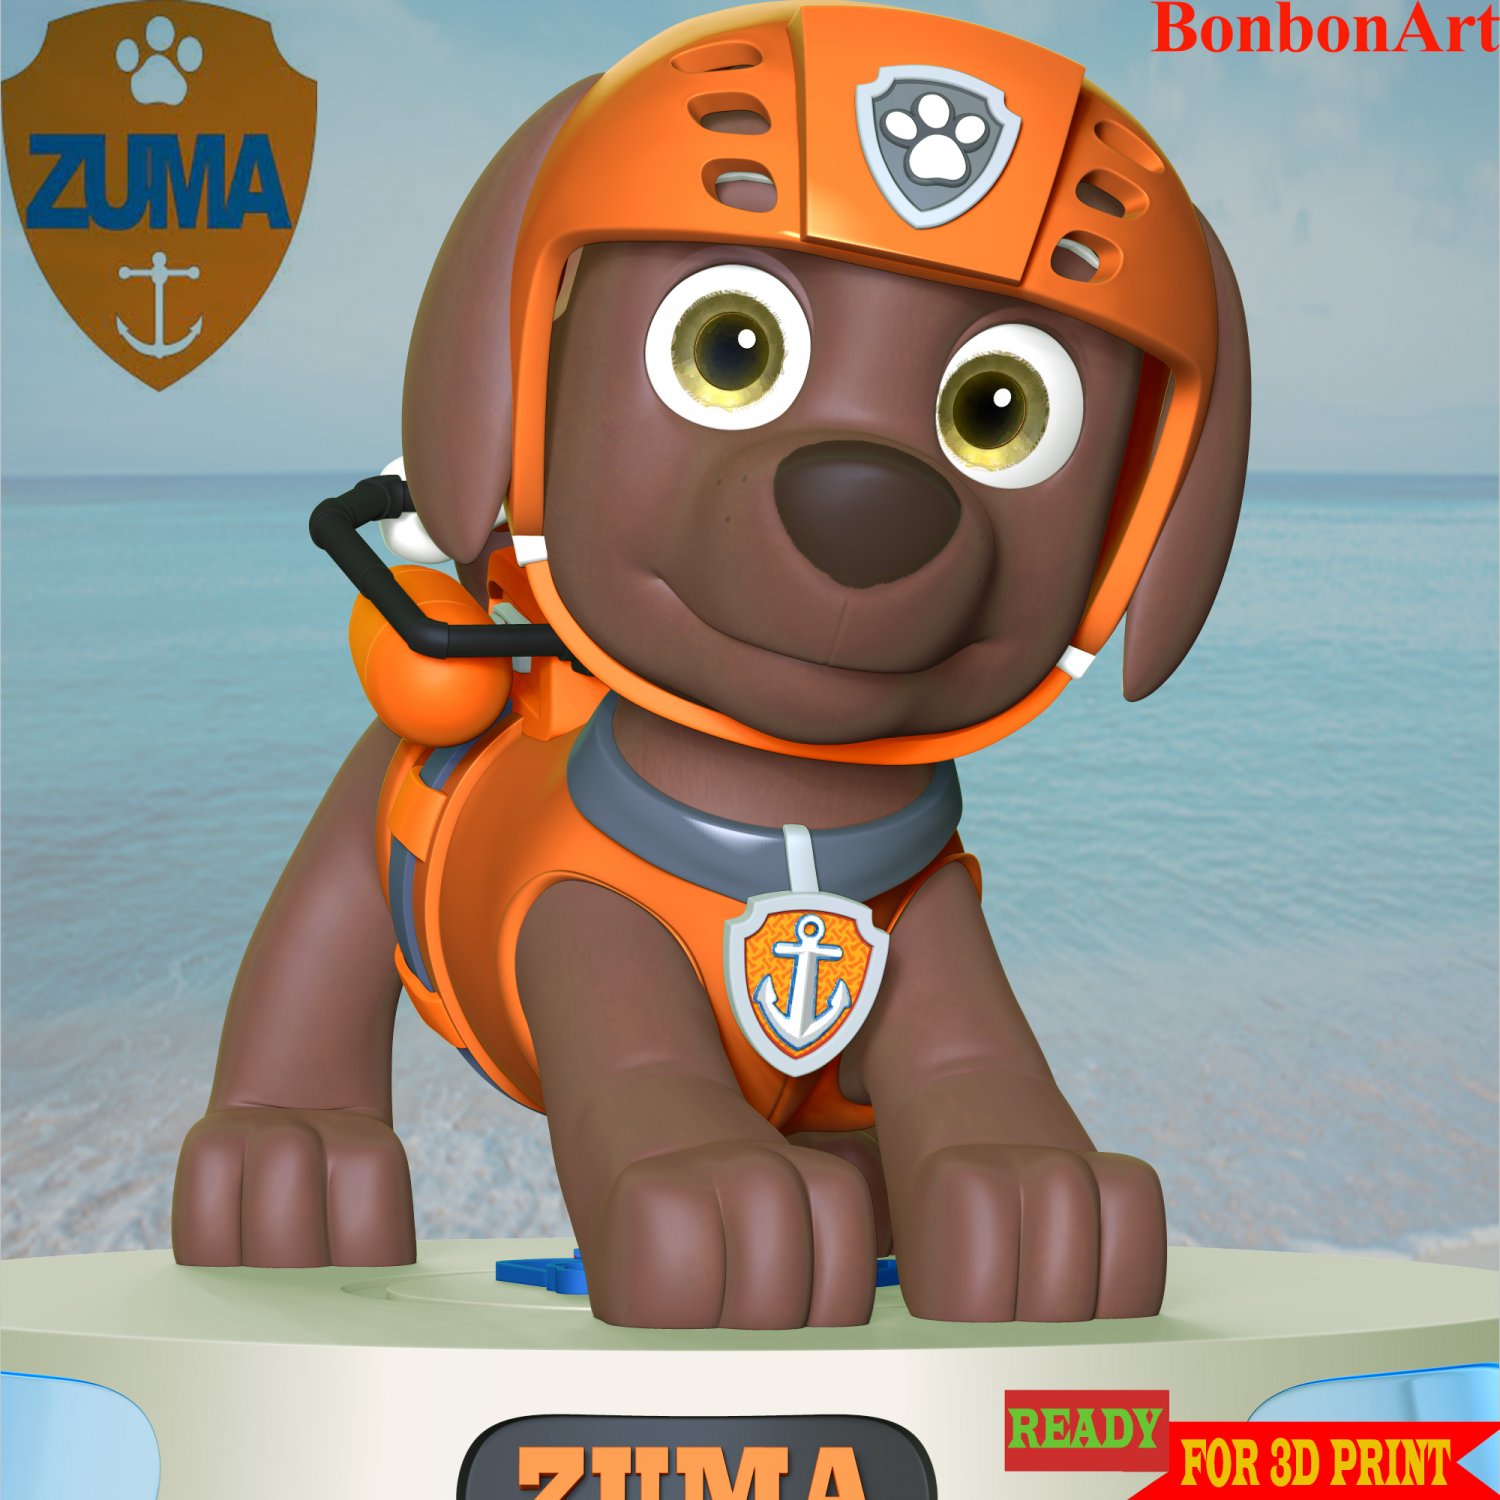 PAW Patrol character illustration, Zuma Labrador Retriever Puppy , paw  patrol transparent background PNG c…